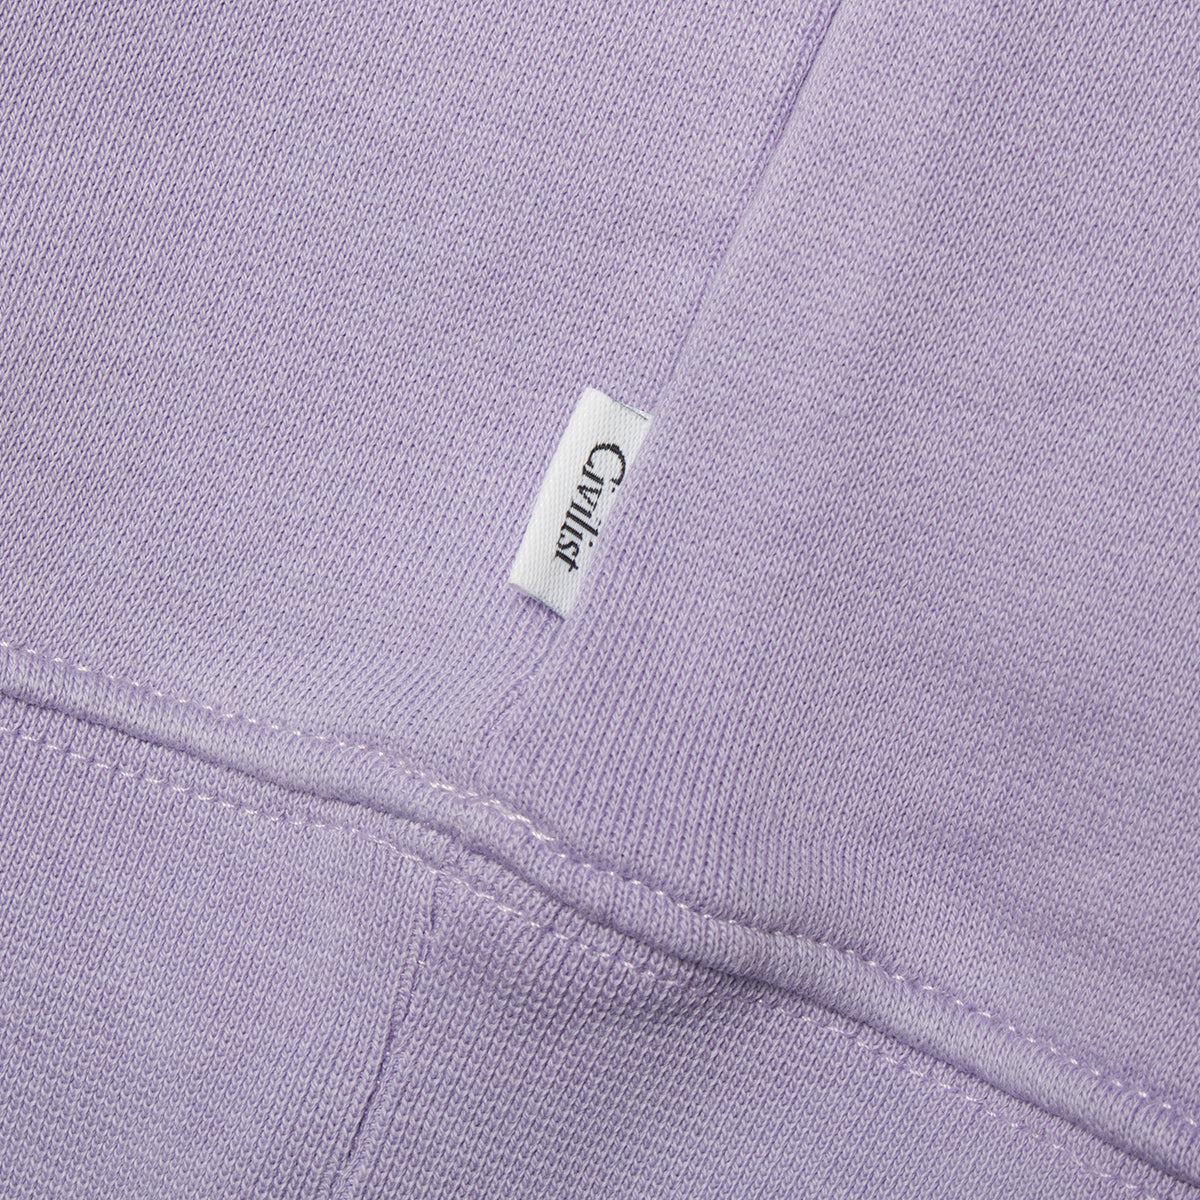 Civilsit | Mini Logo Hoodie Color : Lavender 